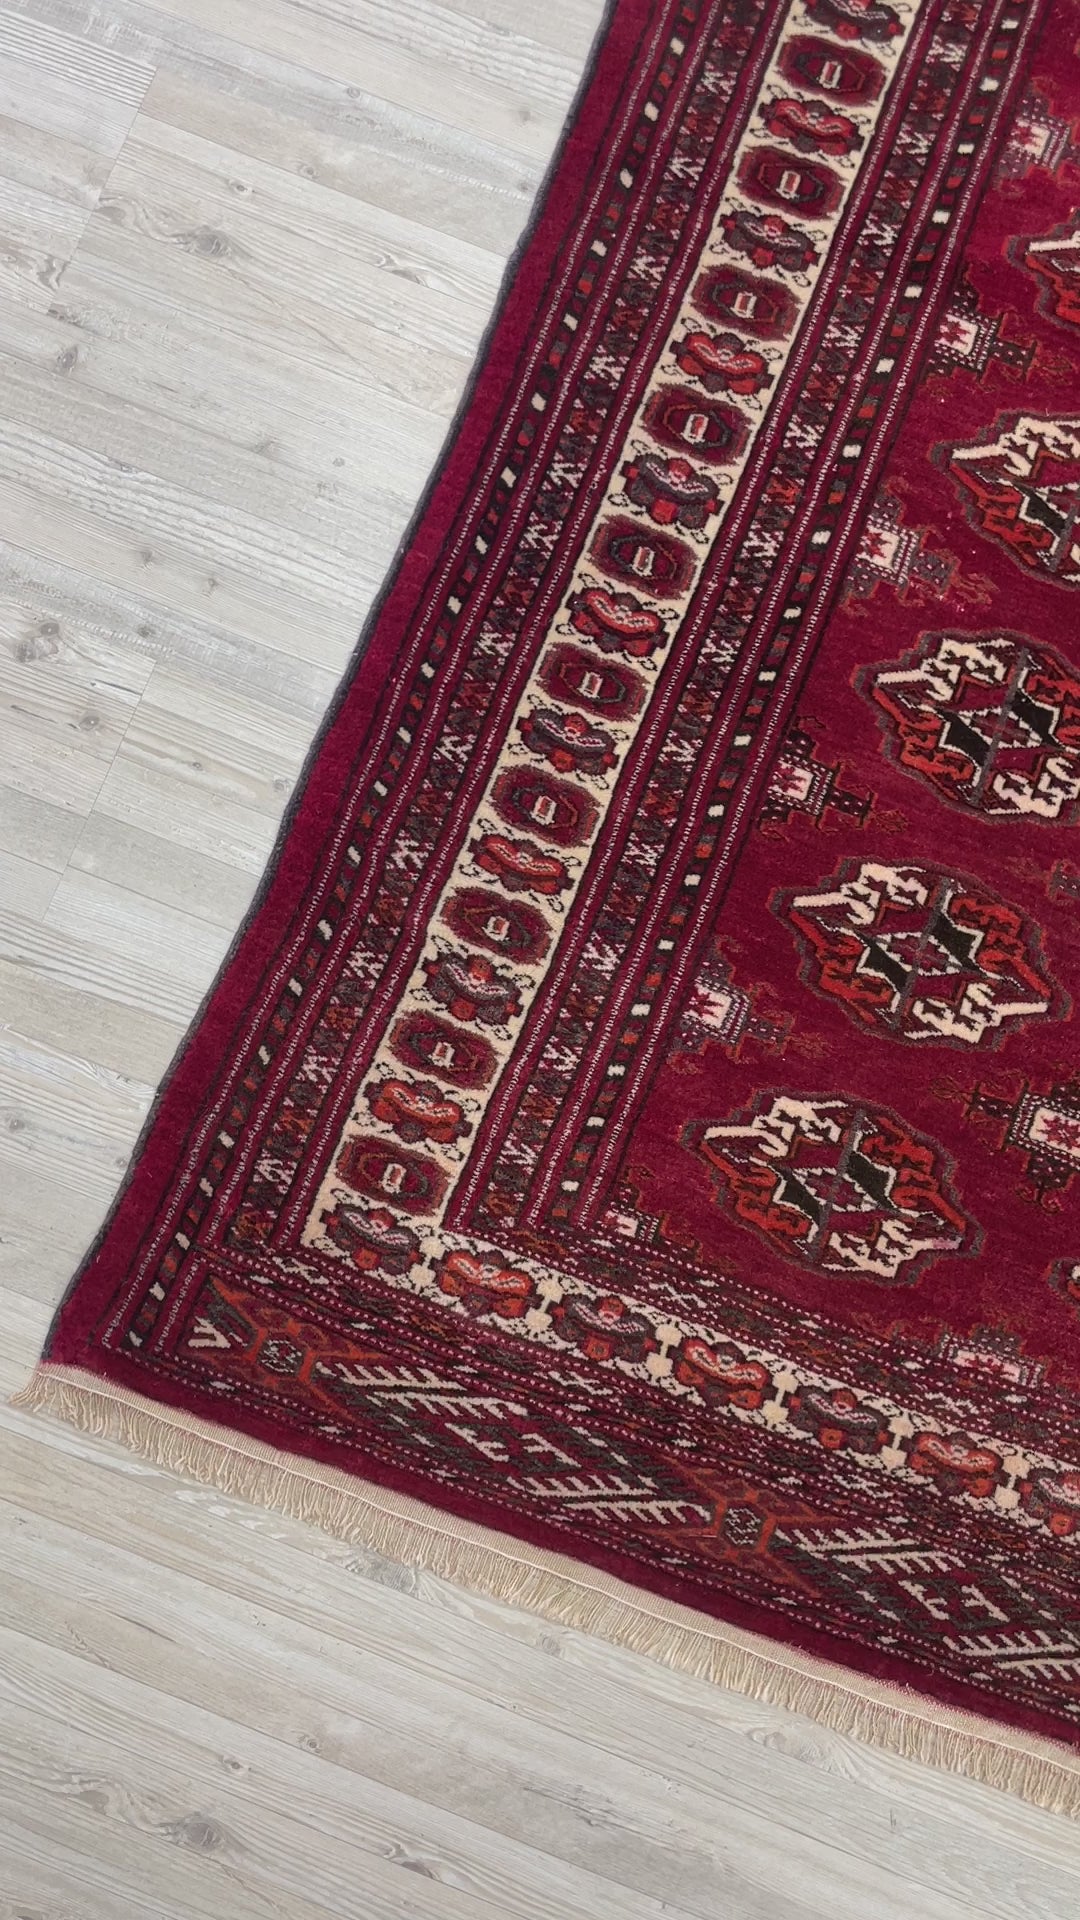 bukhara turkmen rug. Small vintage rug scatter rug for living room, bedroom, office. Oriental rug shop San Francisco Bay area. Buy vintage turkmen rug shop online free shipping to US and Canada.